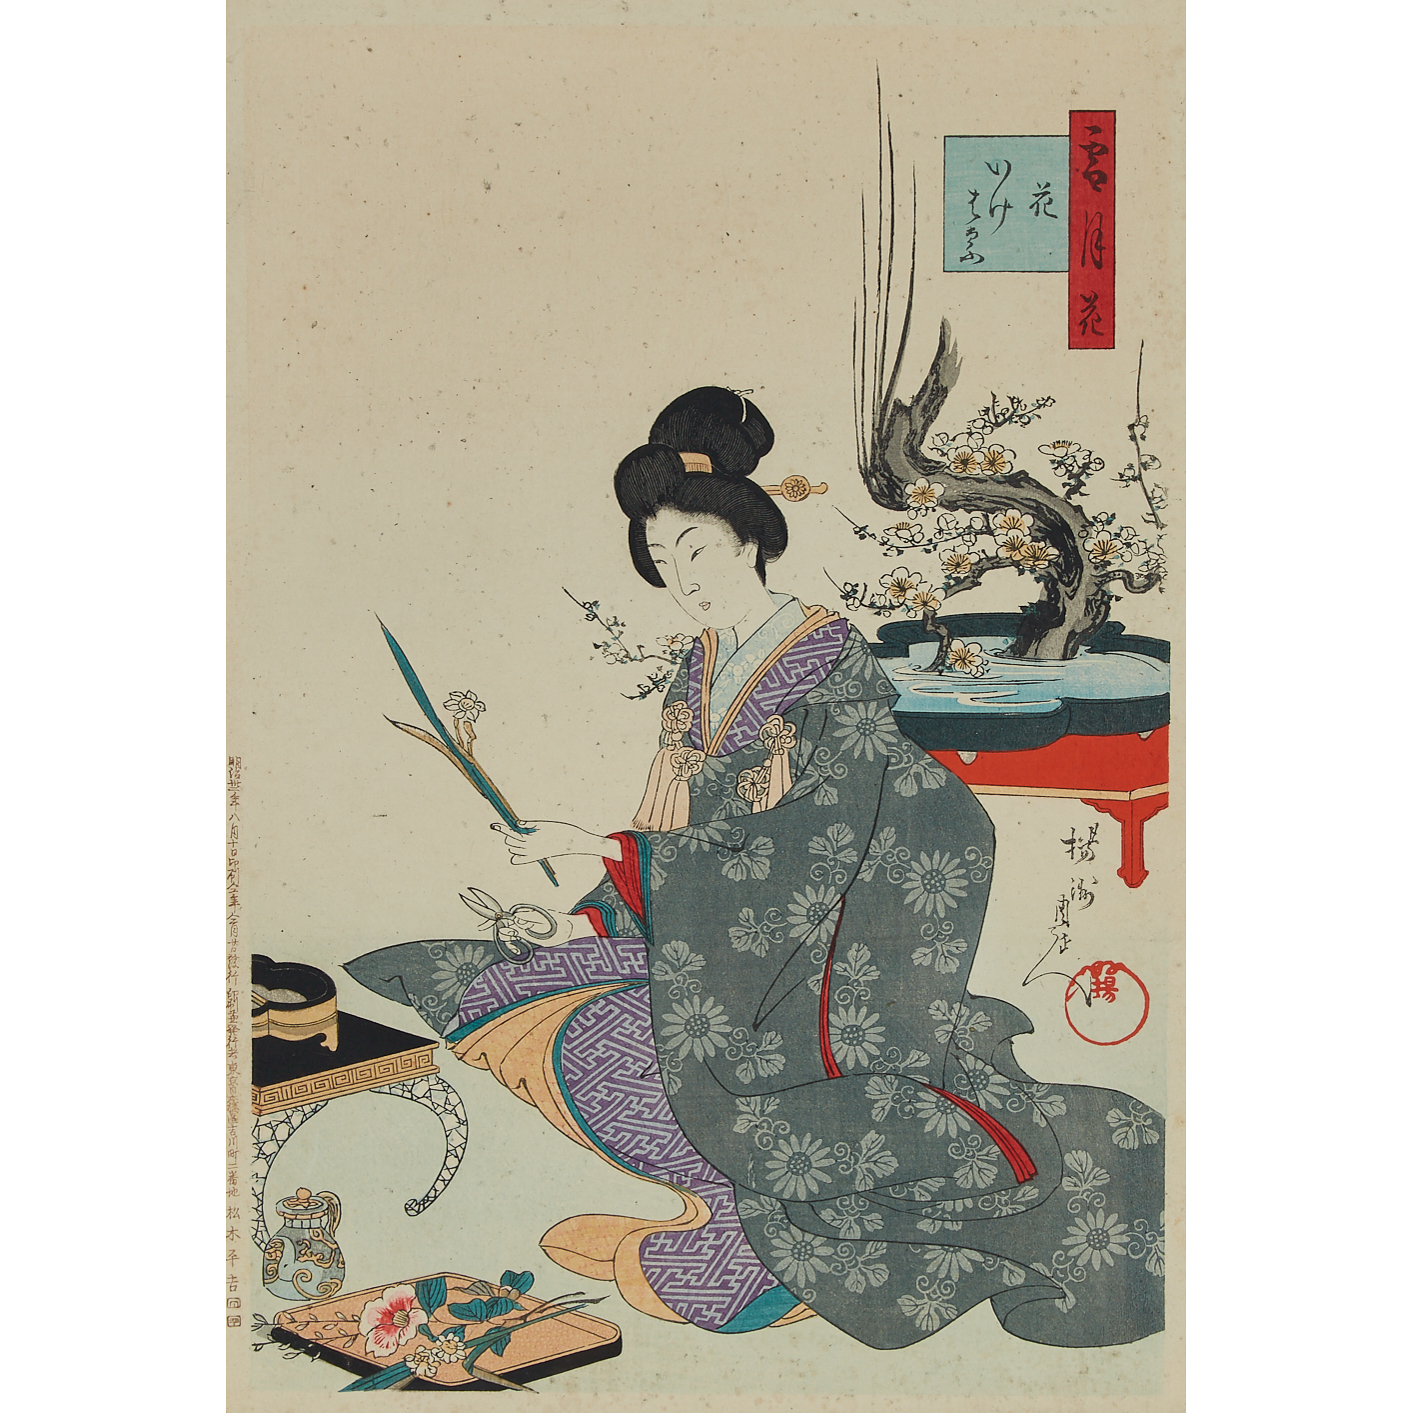 Toyohara Chikanobu (1838-1912), Two Woodblock Prints